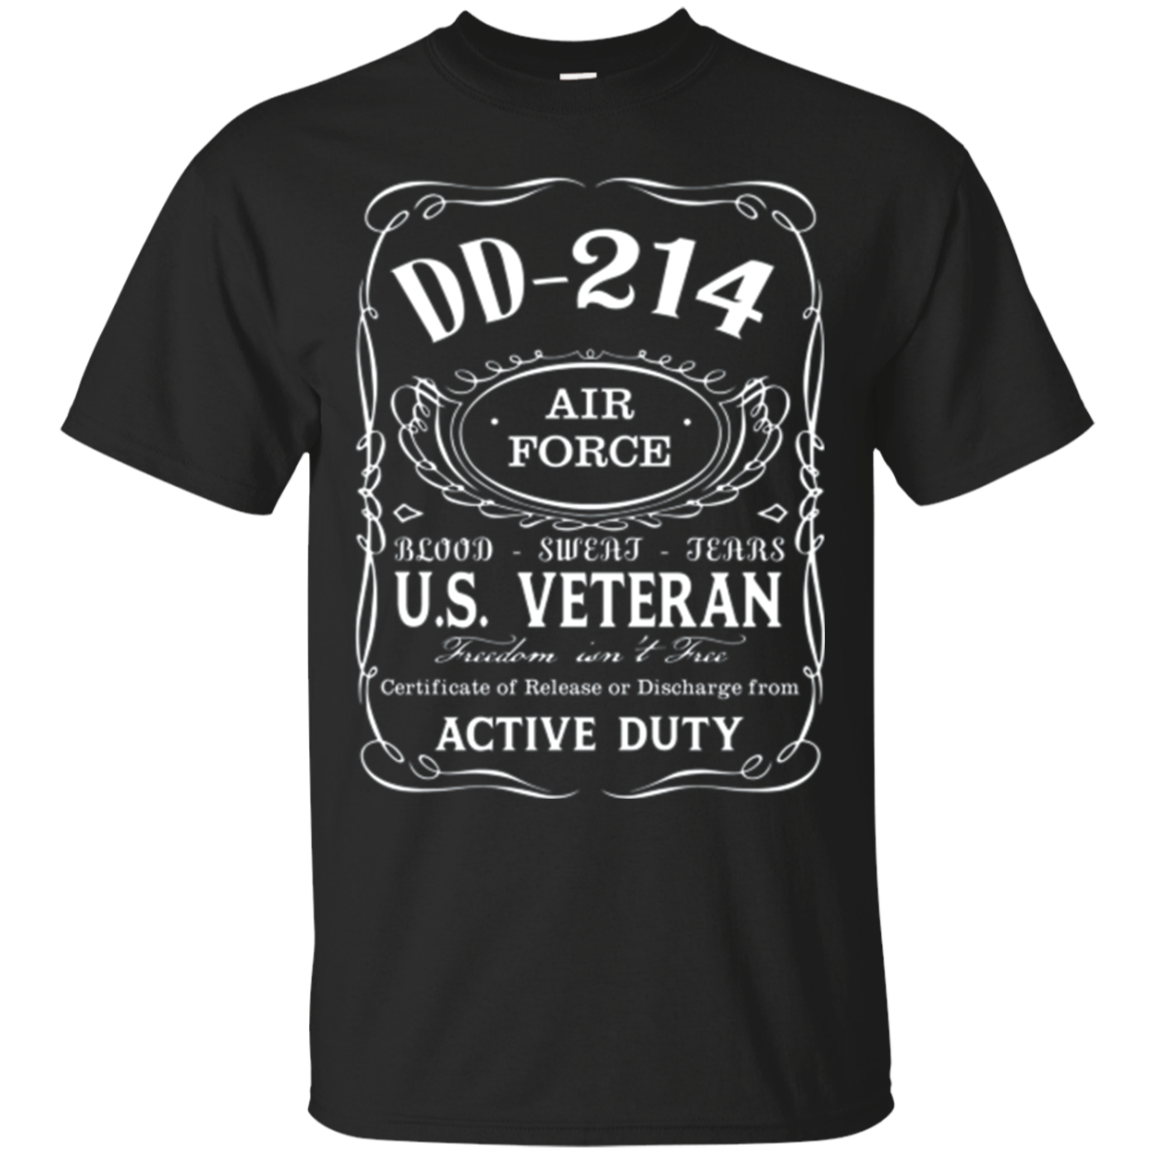 Air Force Dd-214 Alumni T-shirt